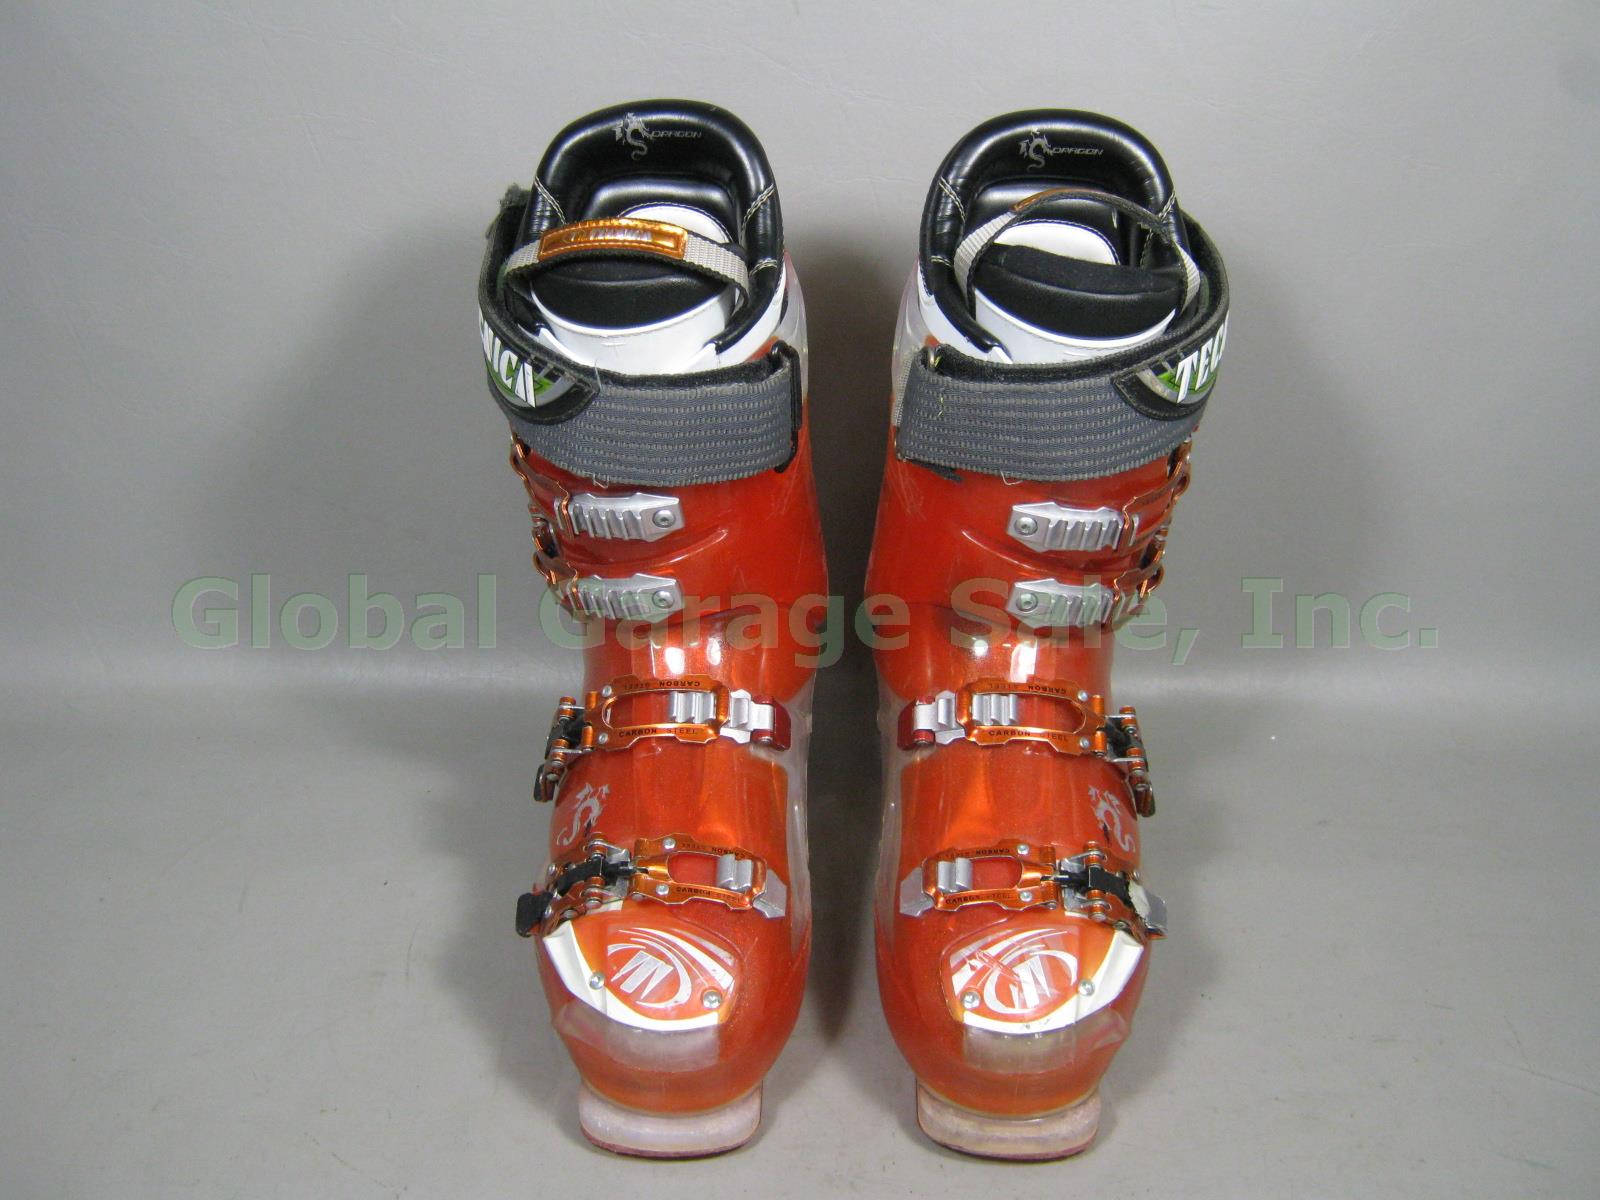 Mens Tecnica Dragon 120 Hiperfit High Performance Medium Volume Ski Boots 27.5 1